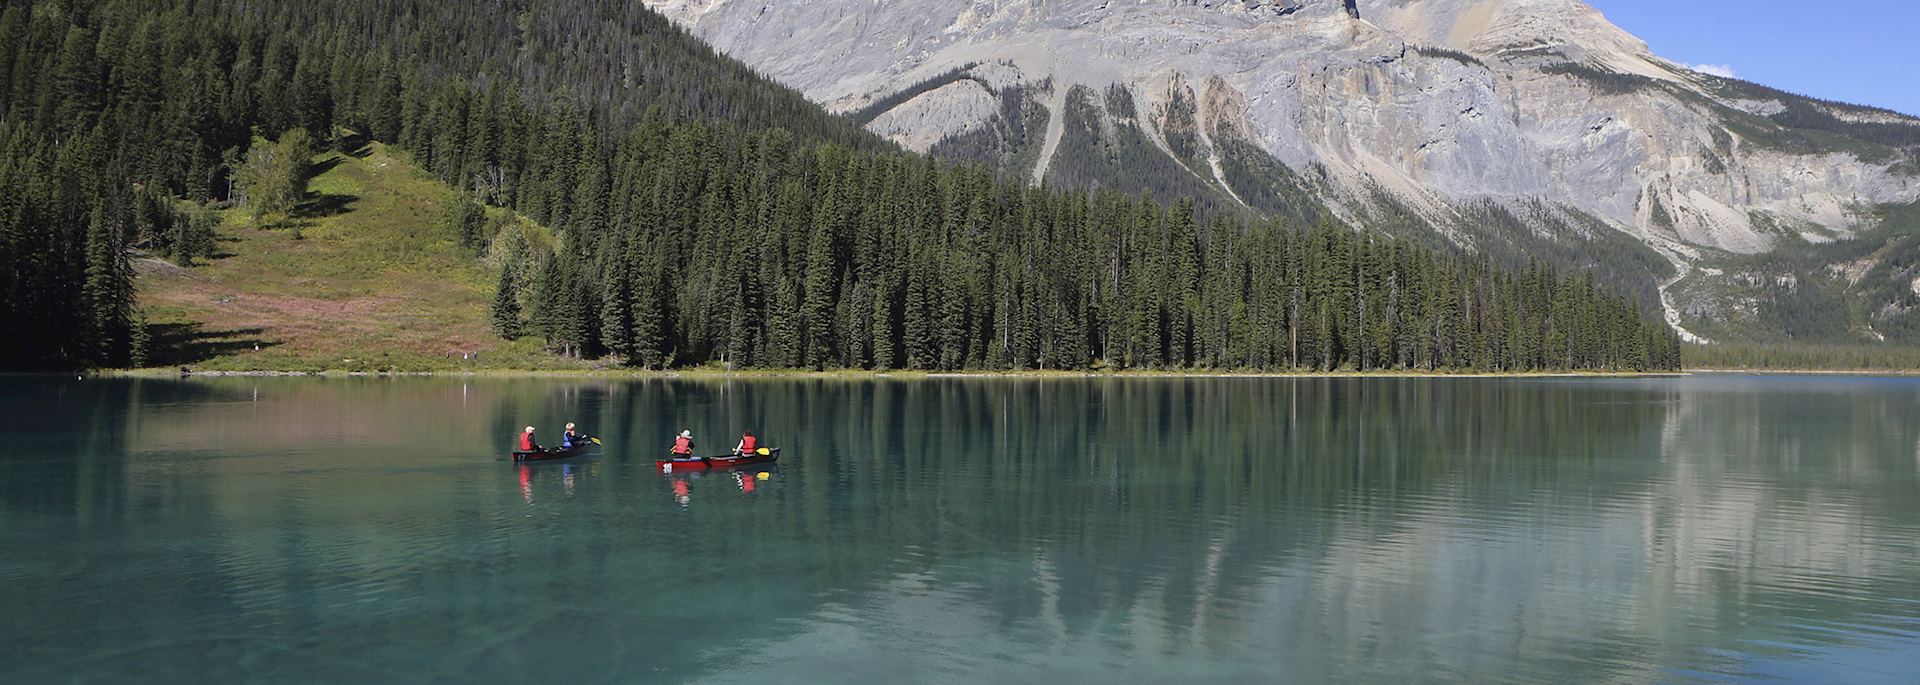 Canoeing on the Emerald Lake, Canada